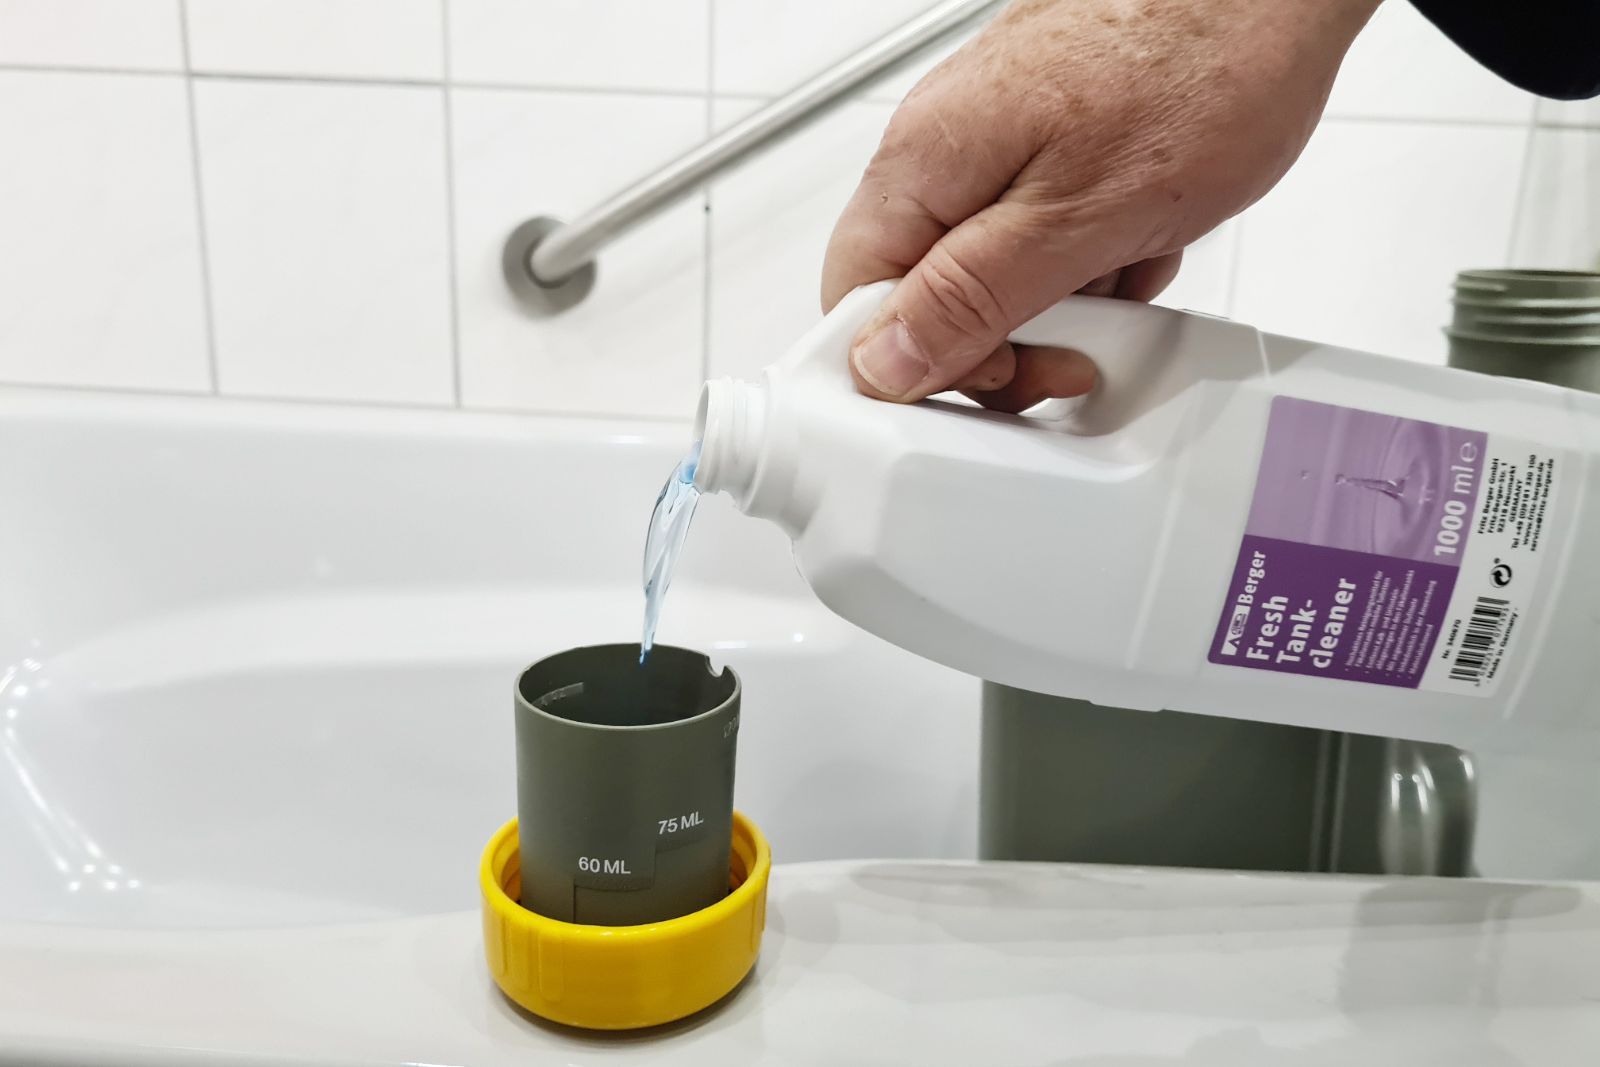 Grauwassertank effektiv reinigen - Hygiene & Sanitär - Hilfe & Beratung -  Berger Blog